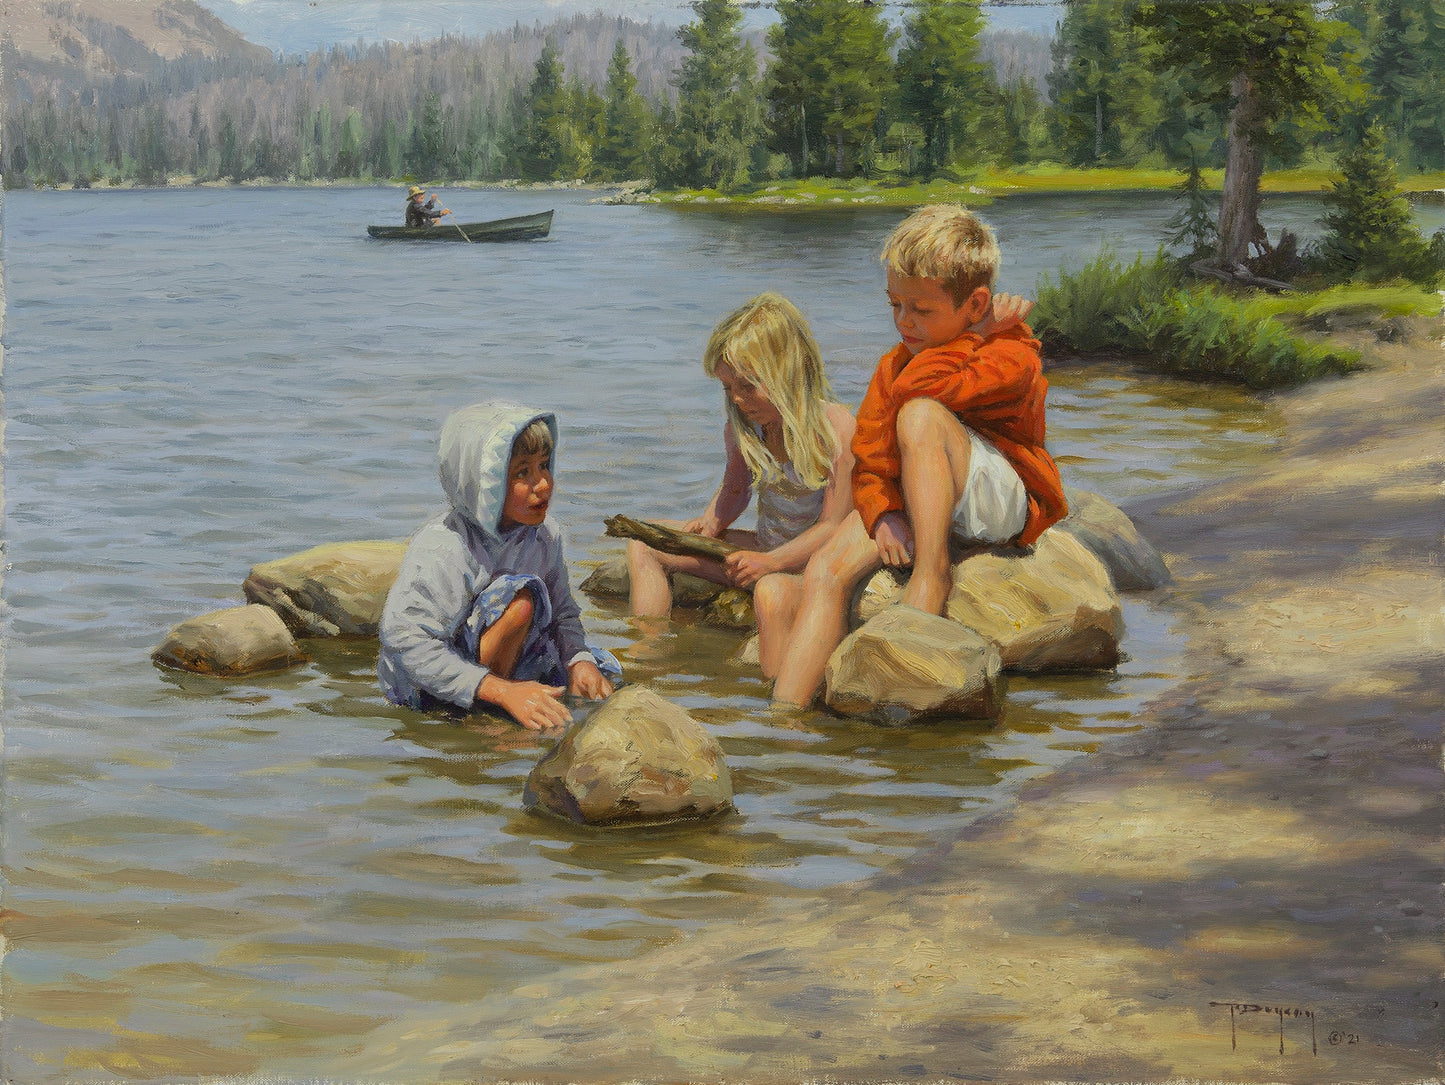 Robert Duncan - Summer Days at the Lake